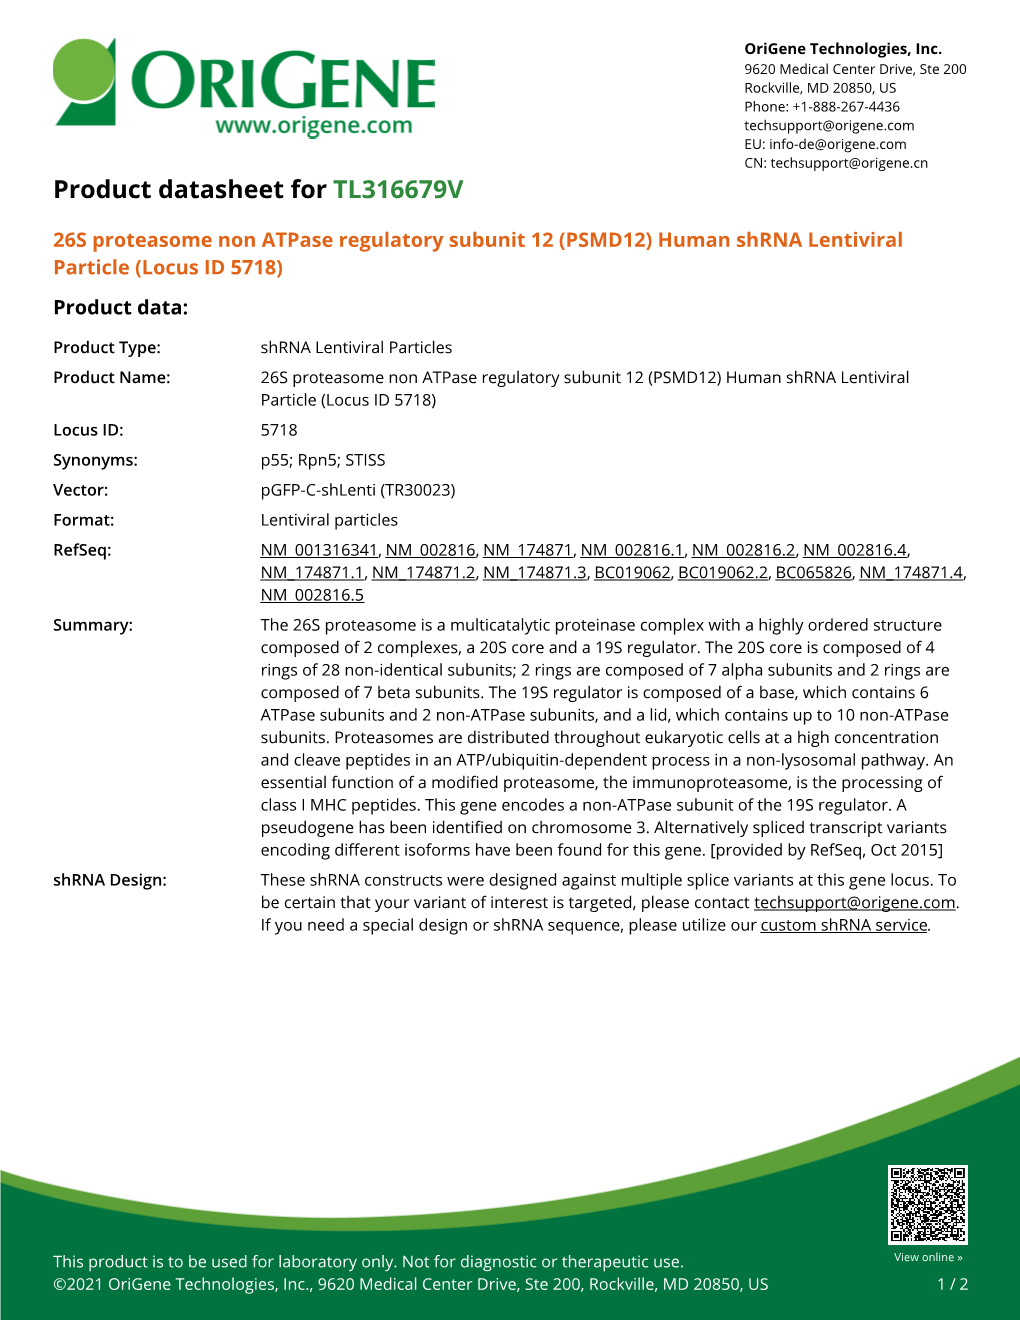 26S Proteasome Non Atpase Regulatory Subunit 12 (PSMD12) Human Shrna Lentiviral Particle (Locus ID 5718) Product Data